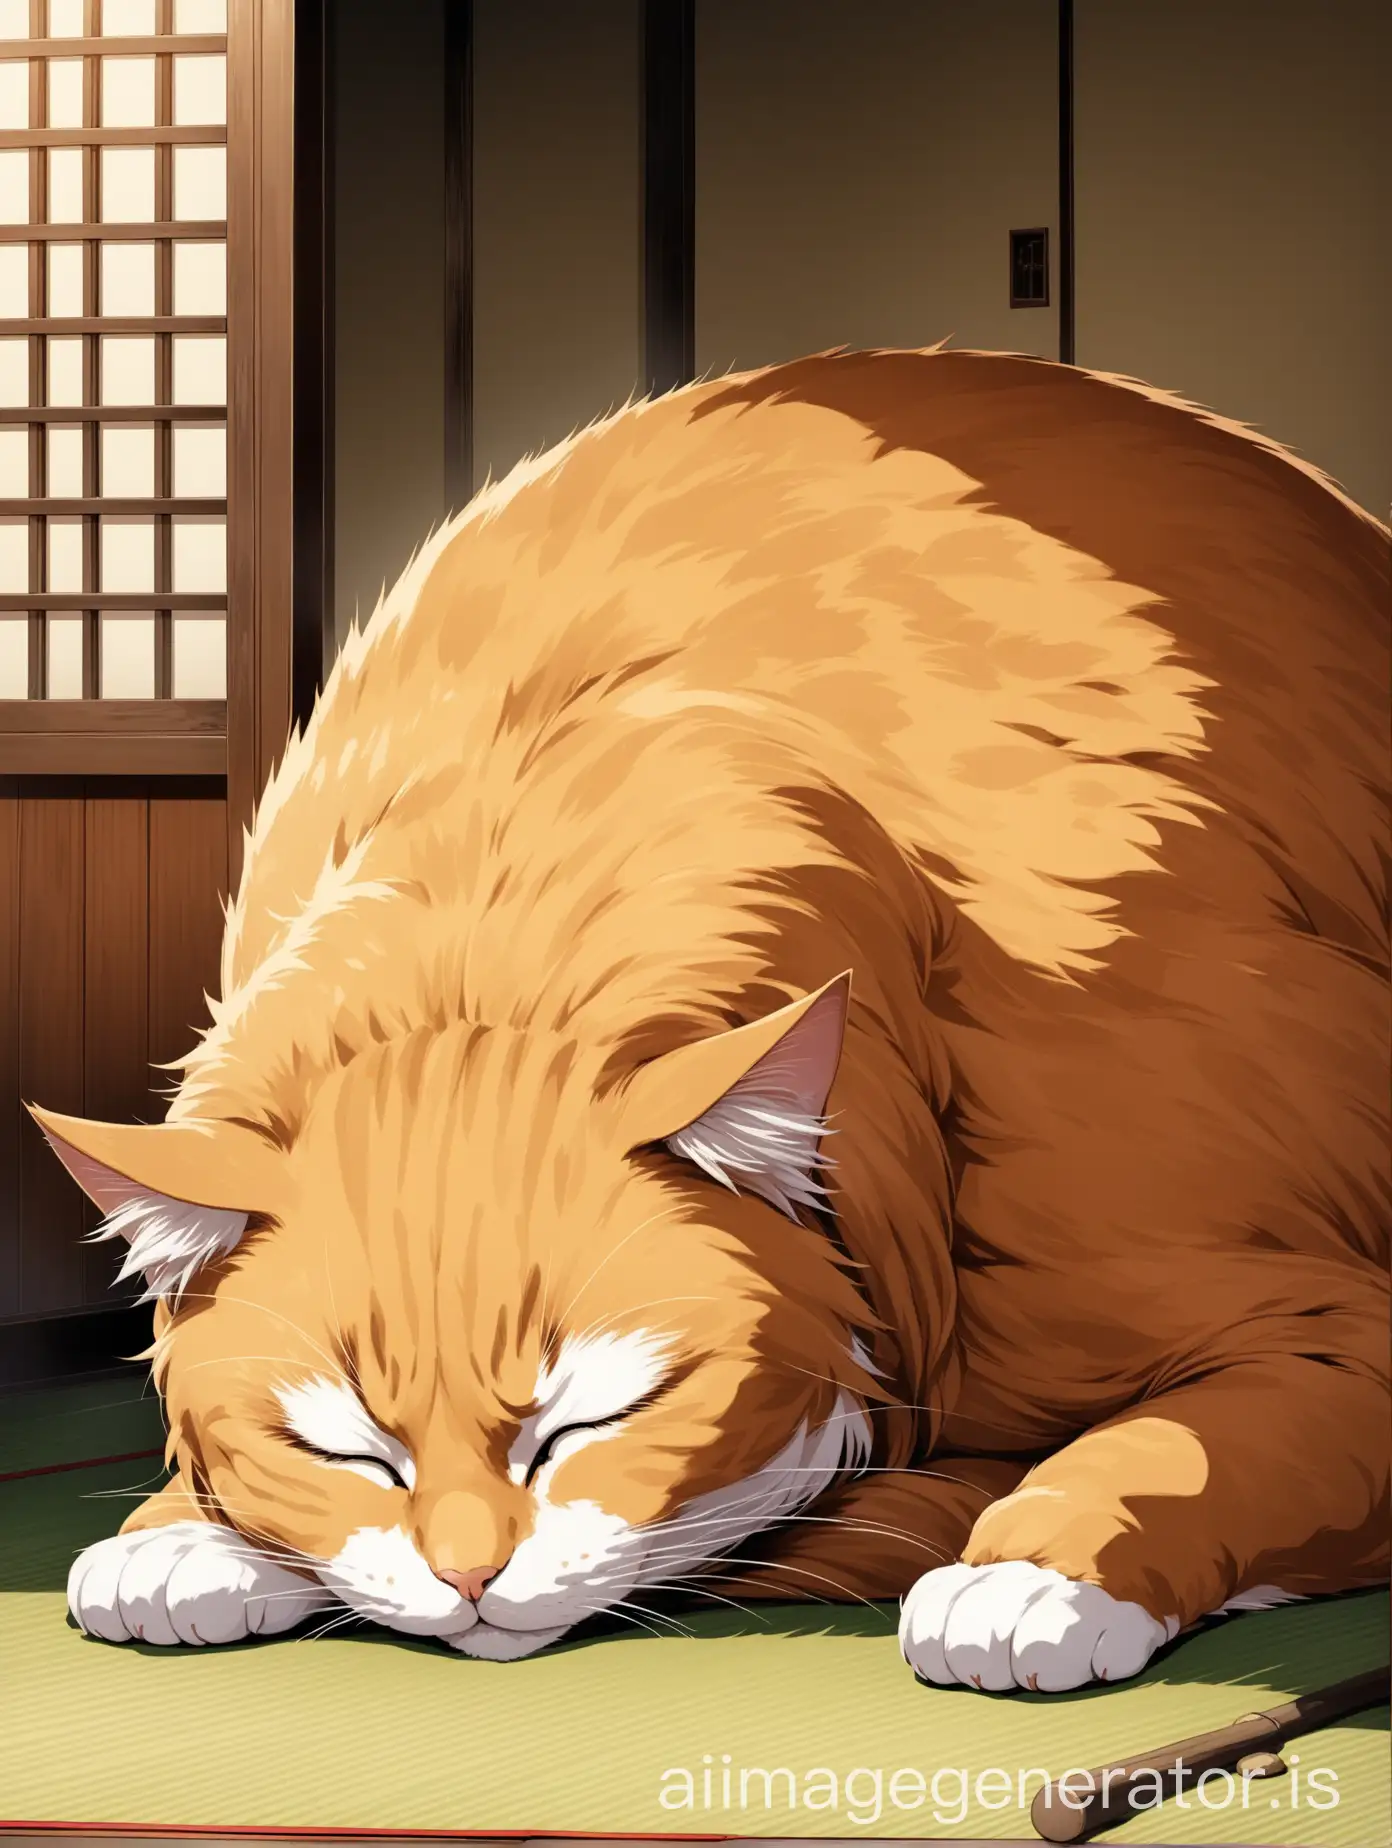 Gigantic-Cat-Sleeping-in-Traditional-Japanese-Tatami-Room